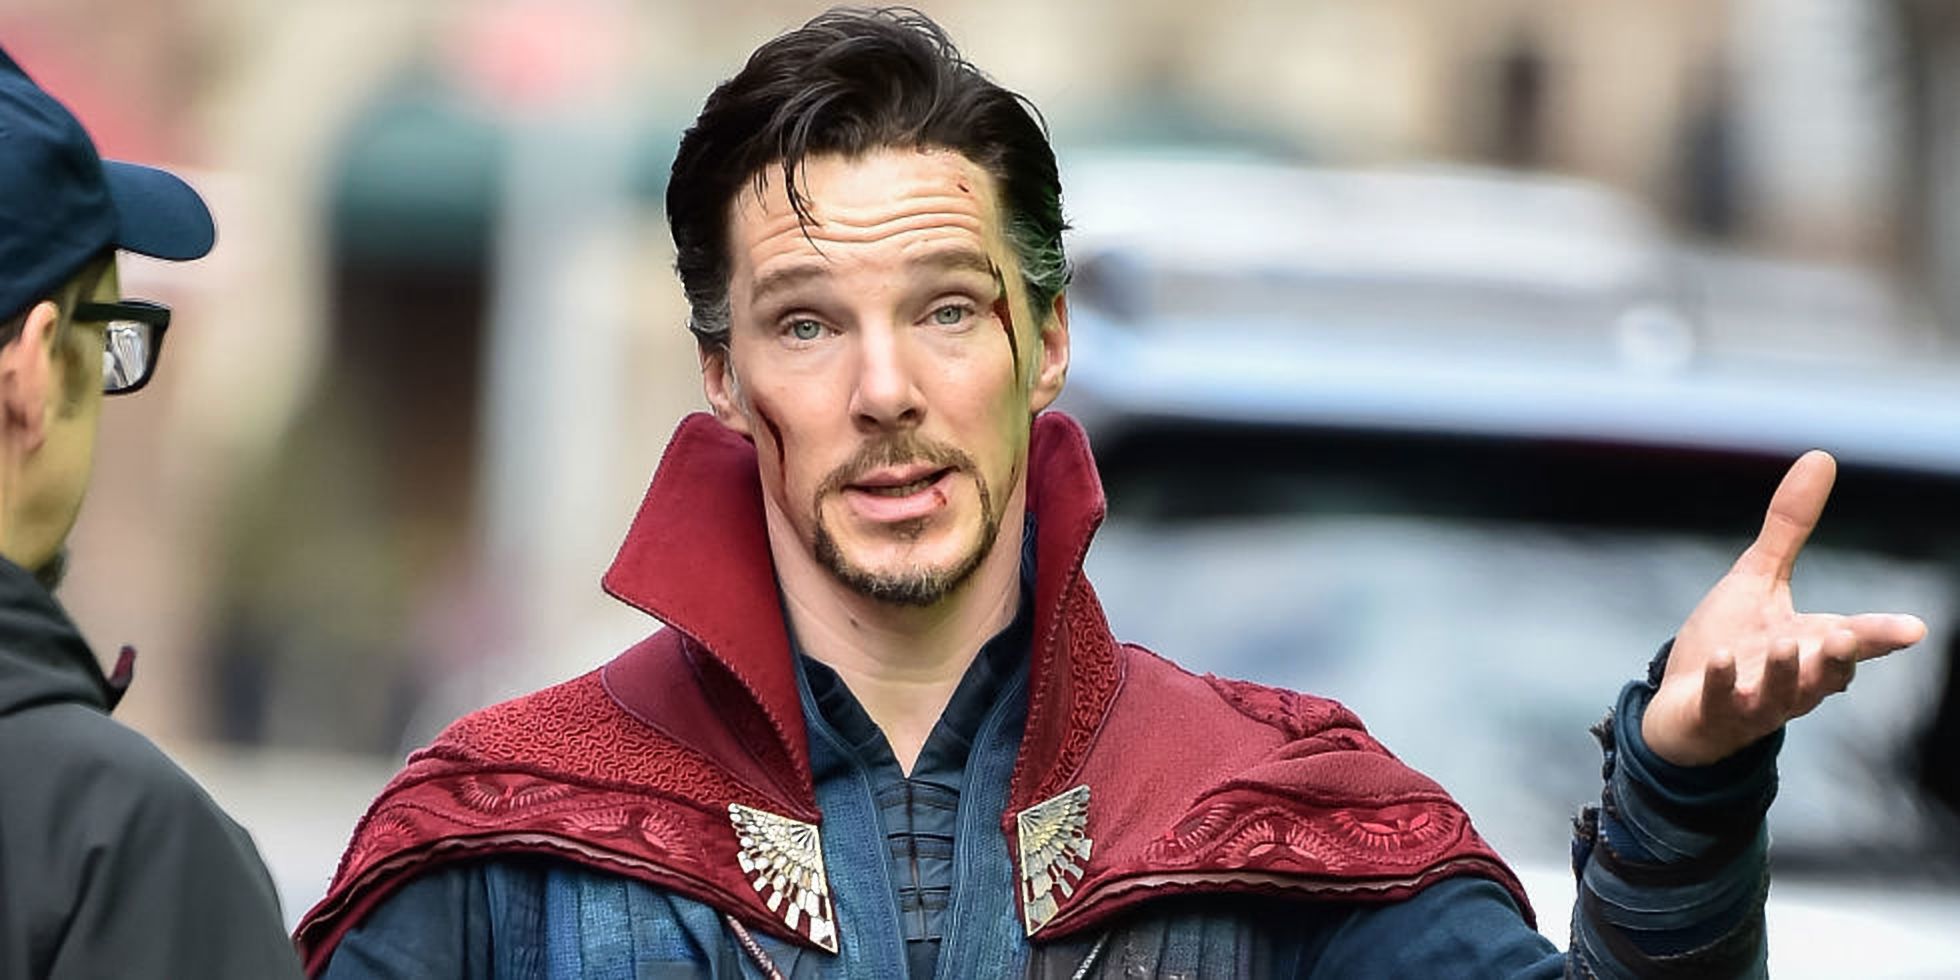 Watch Benedict Cumberbatch Walk into a Comic Shop Dressed as Doctor Strange